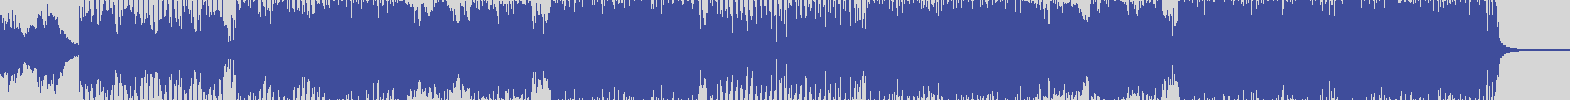 suxess [SX001] Alex Gaudino - No More [Alex Gaudino & Jason Rooney Edit] audio wave form